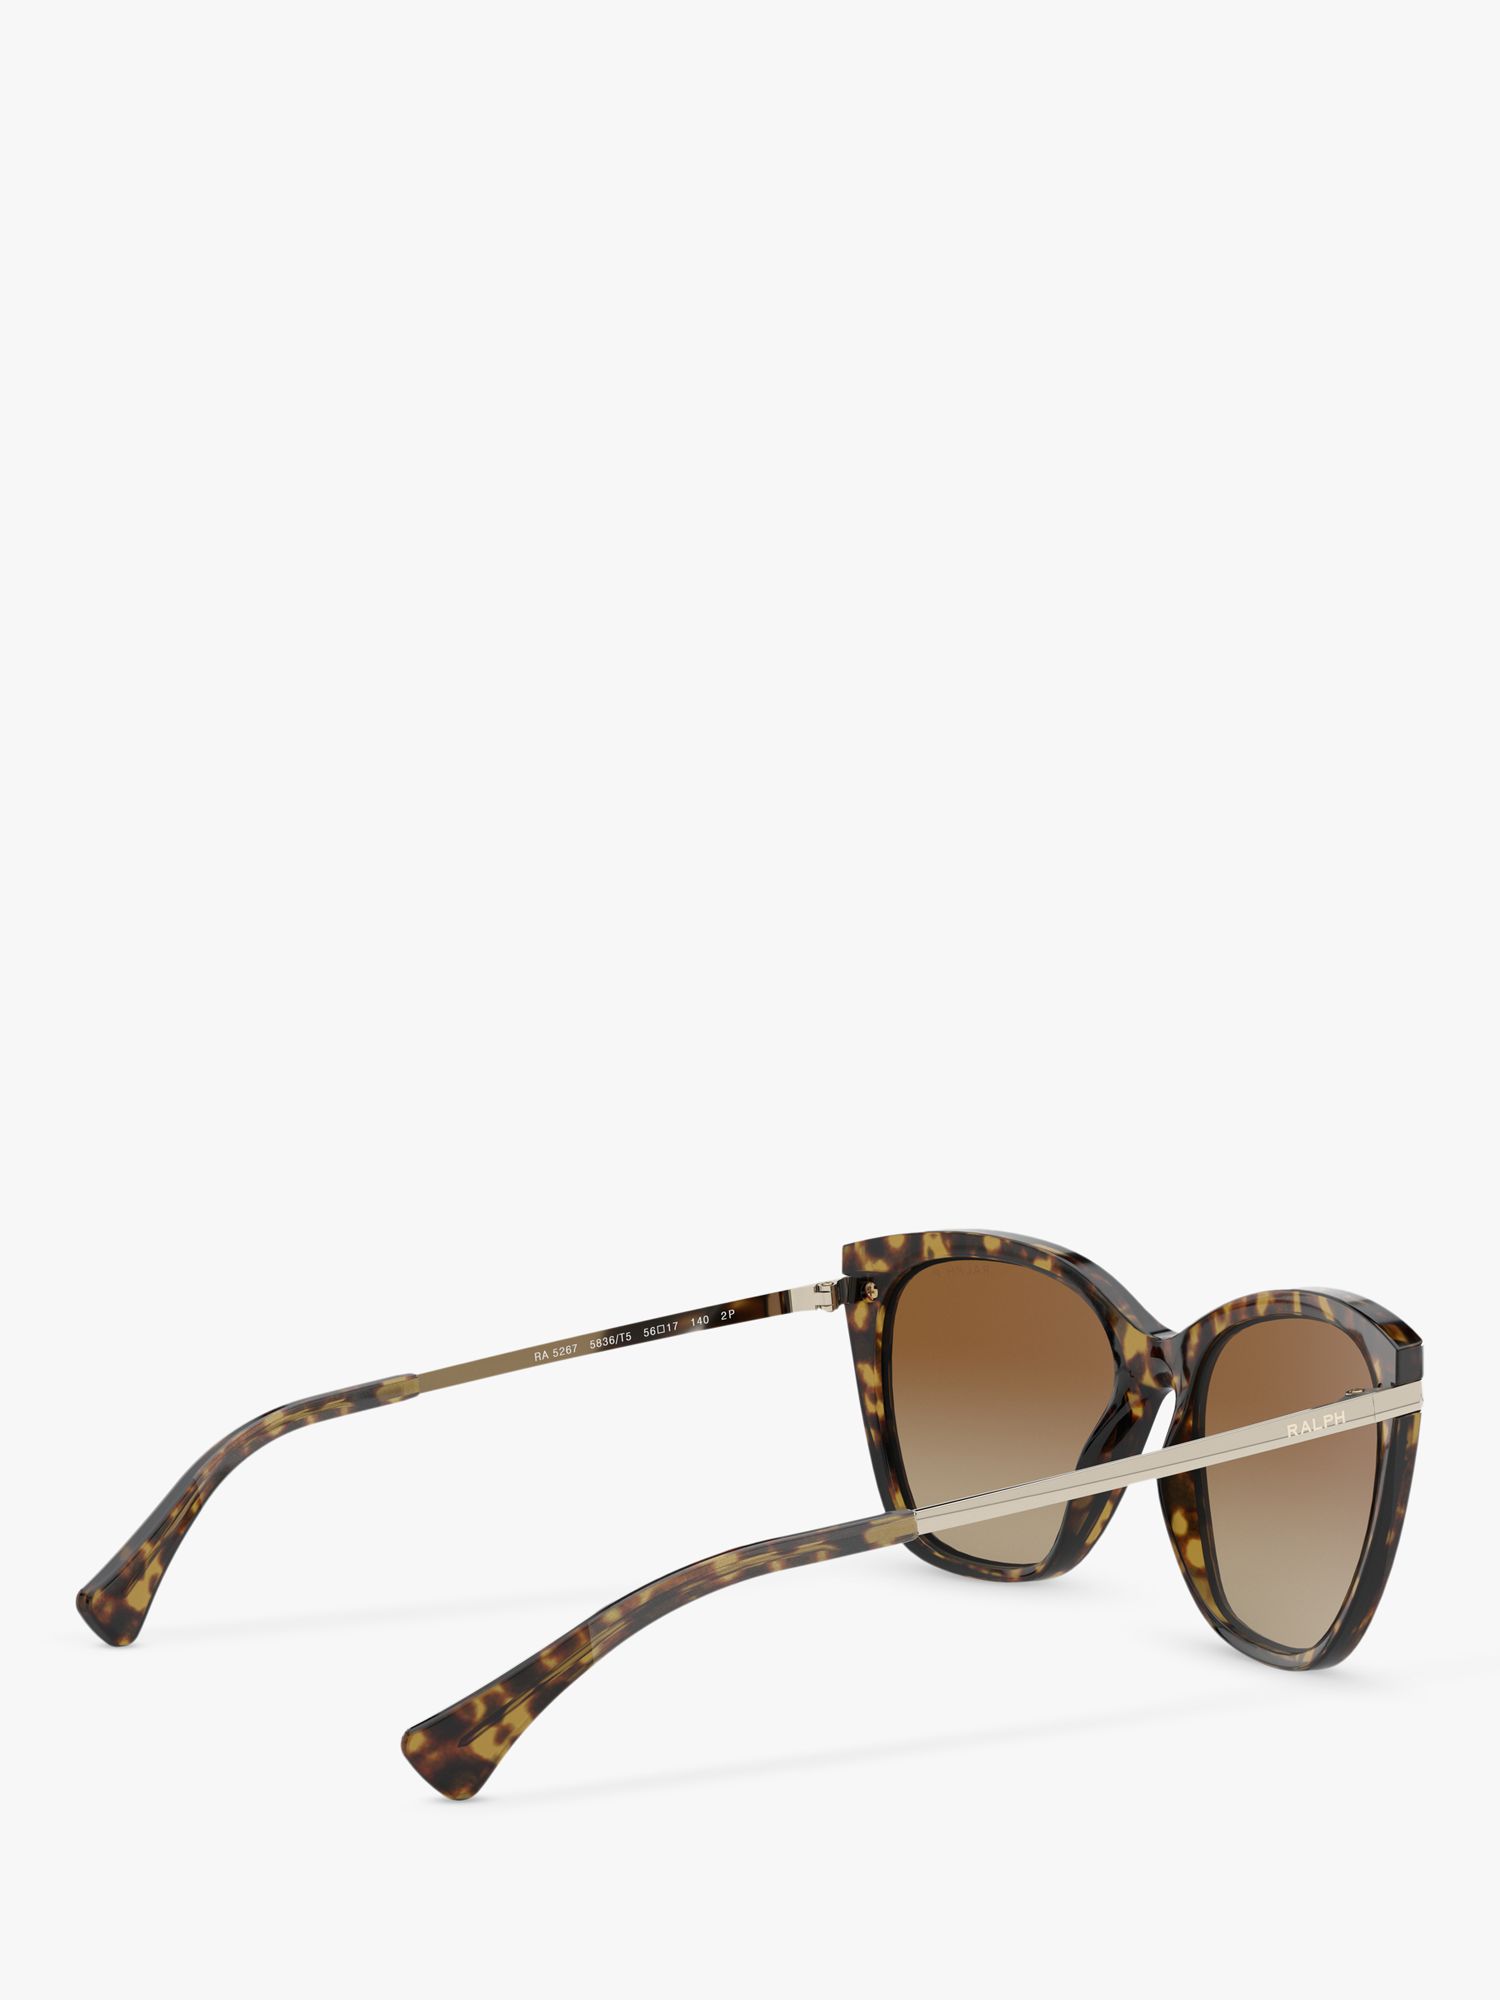 Buy Ralph Lauren RA5267 Women's Butterfly Sunglasses Online at johnlewis.com